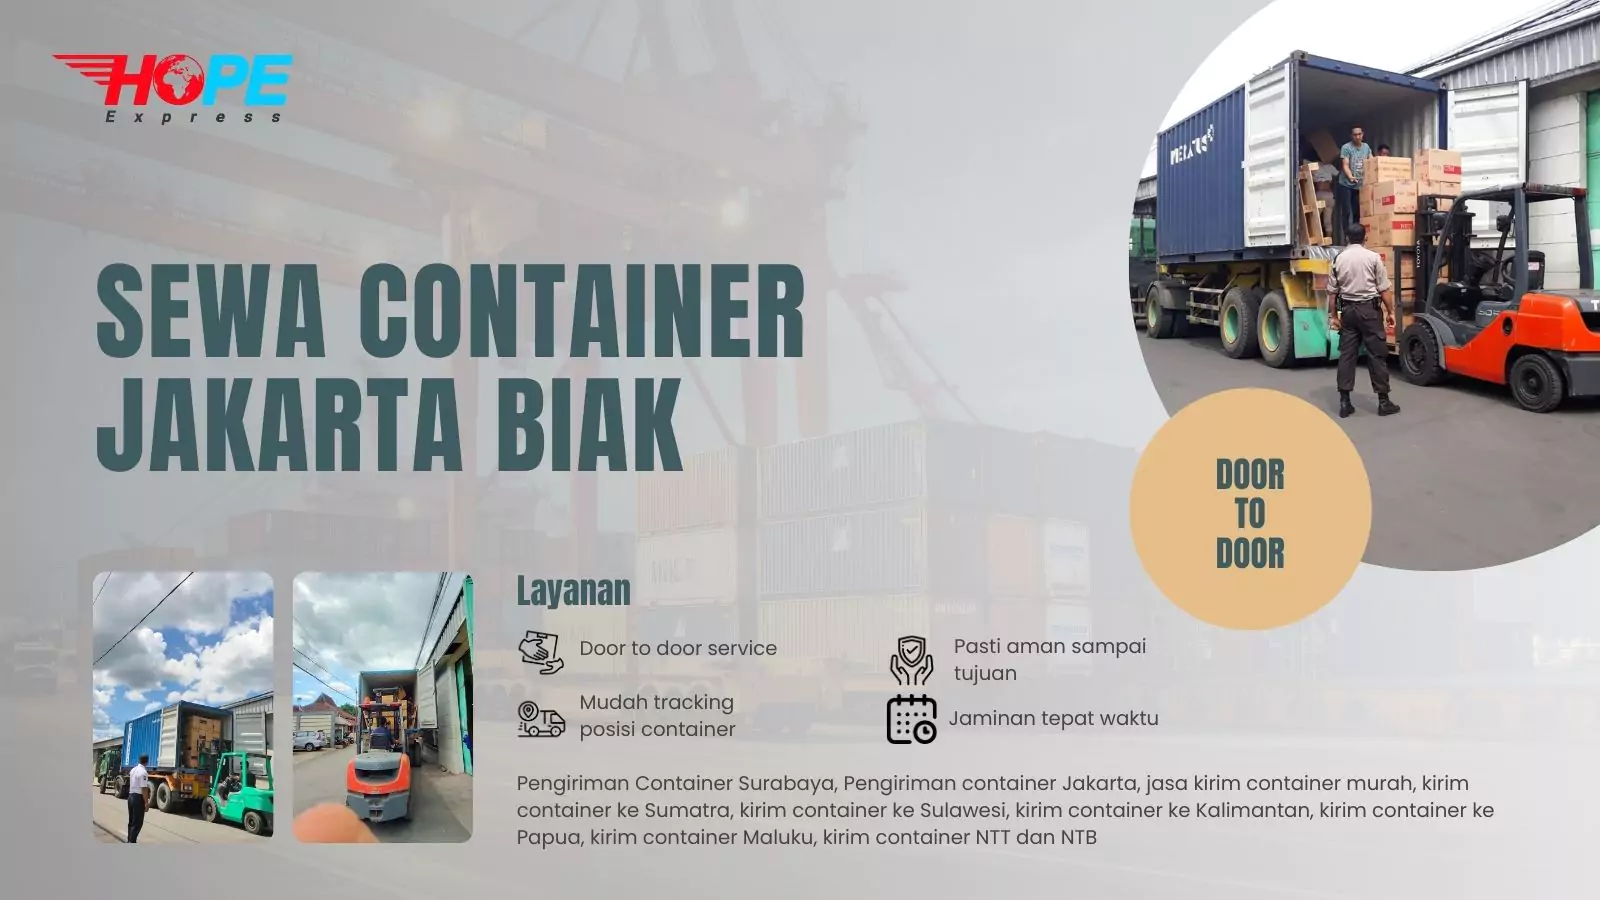 Sewa Container Jakarta Biak